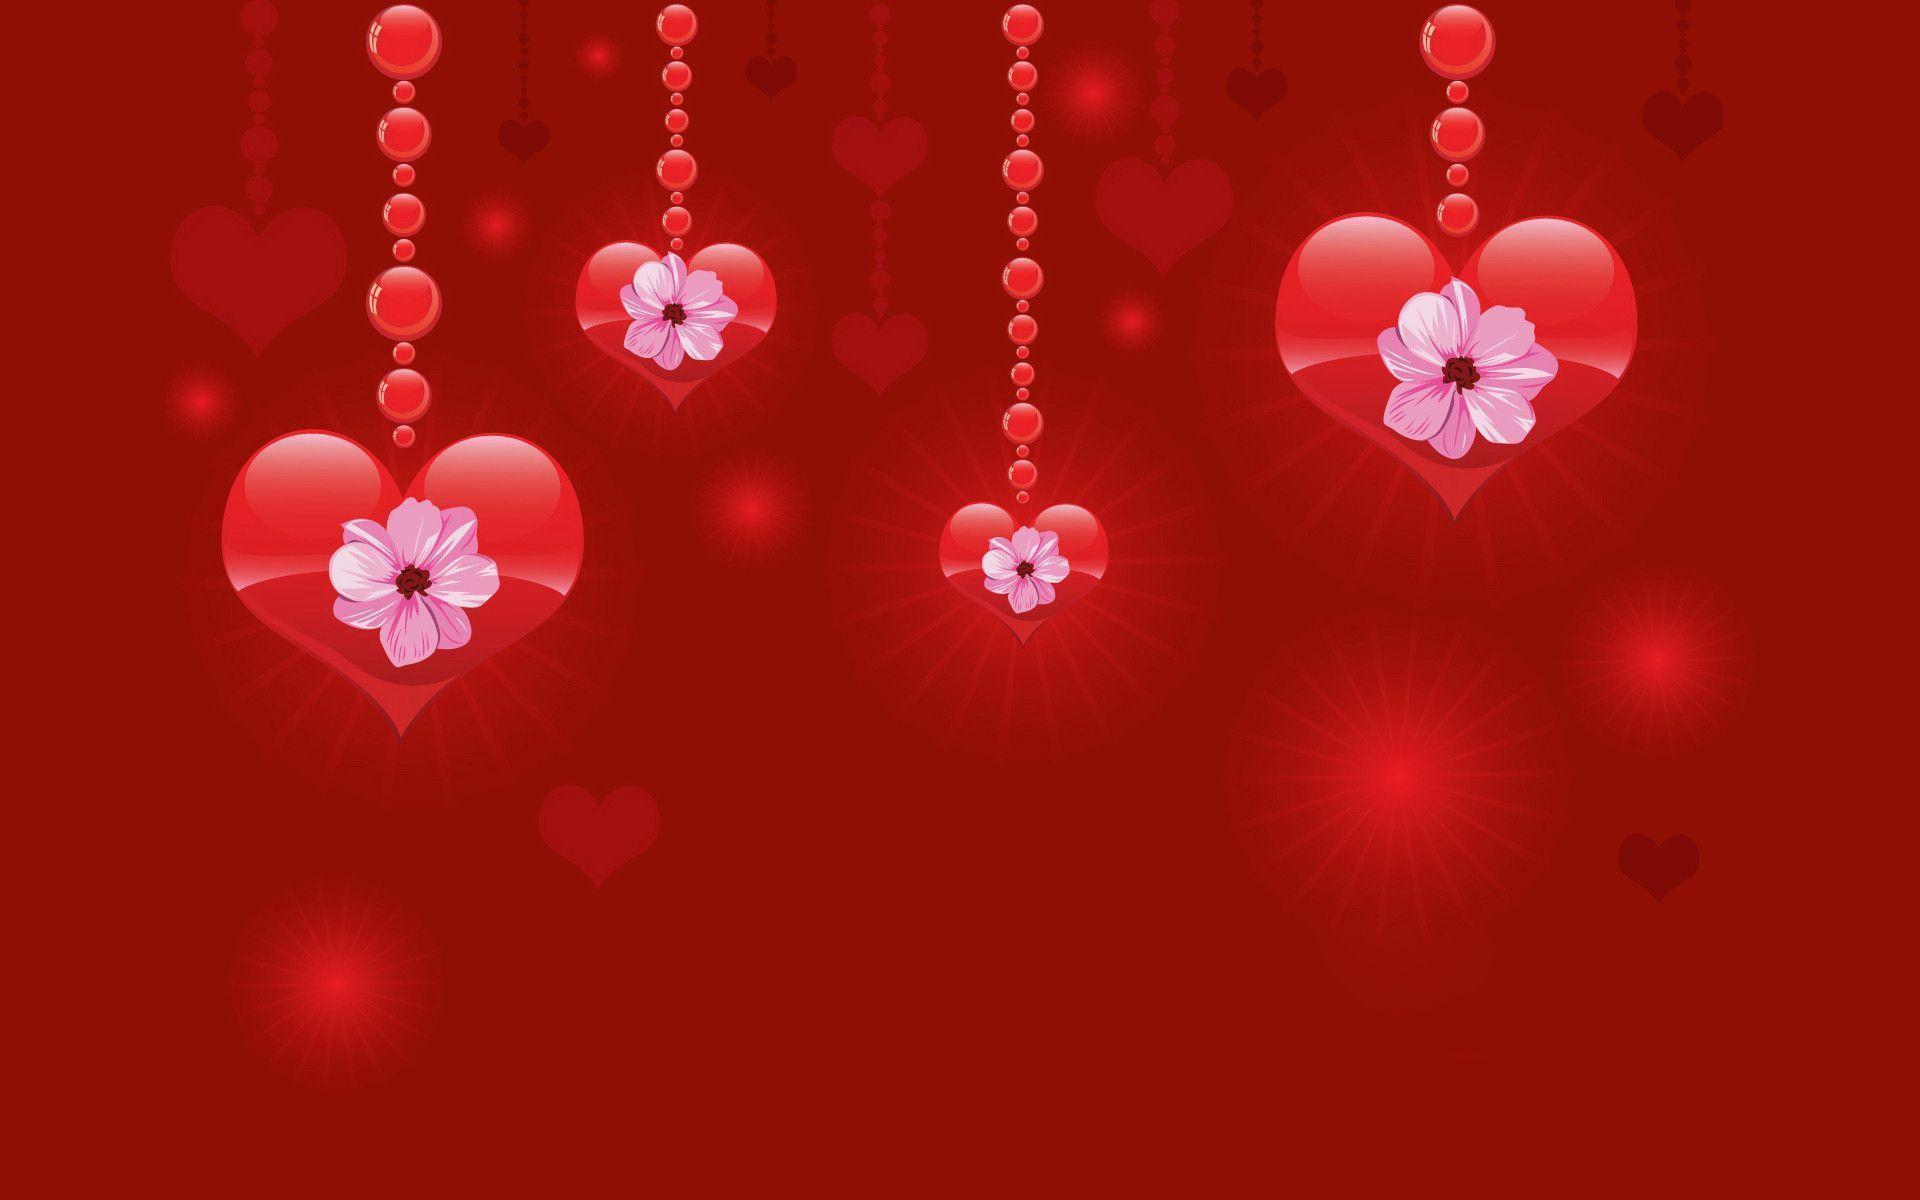 Happy Valentines Day Wallpaper. Piccry.com: Picture Idea Gallery